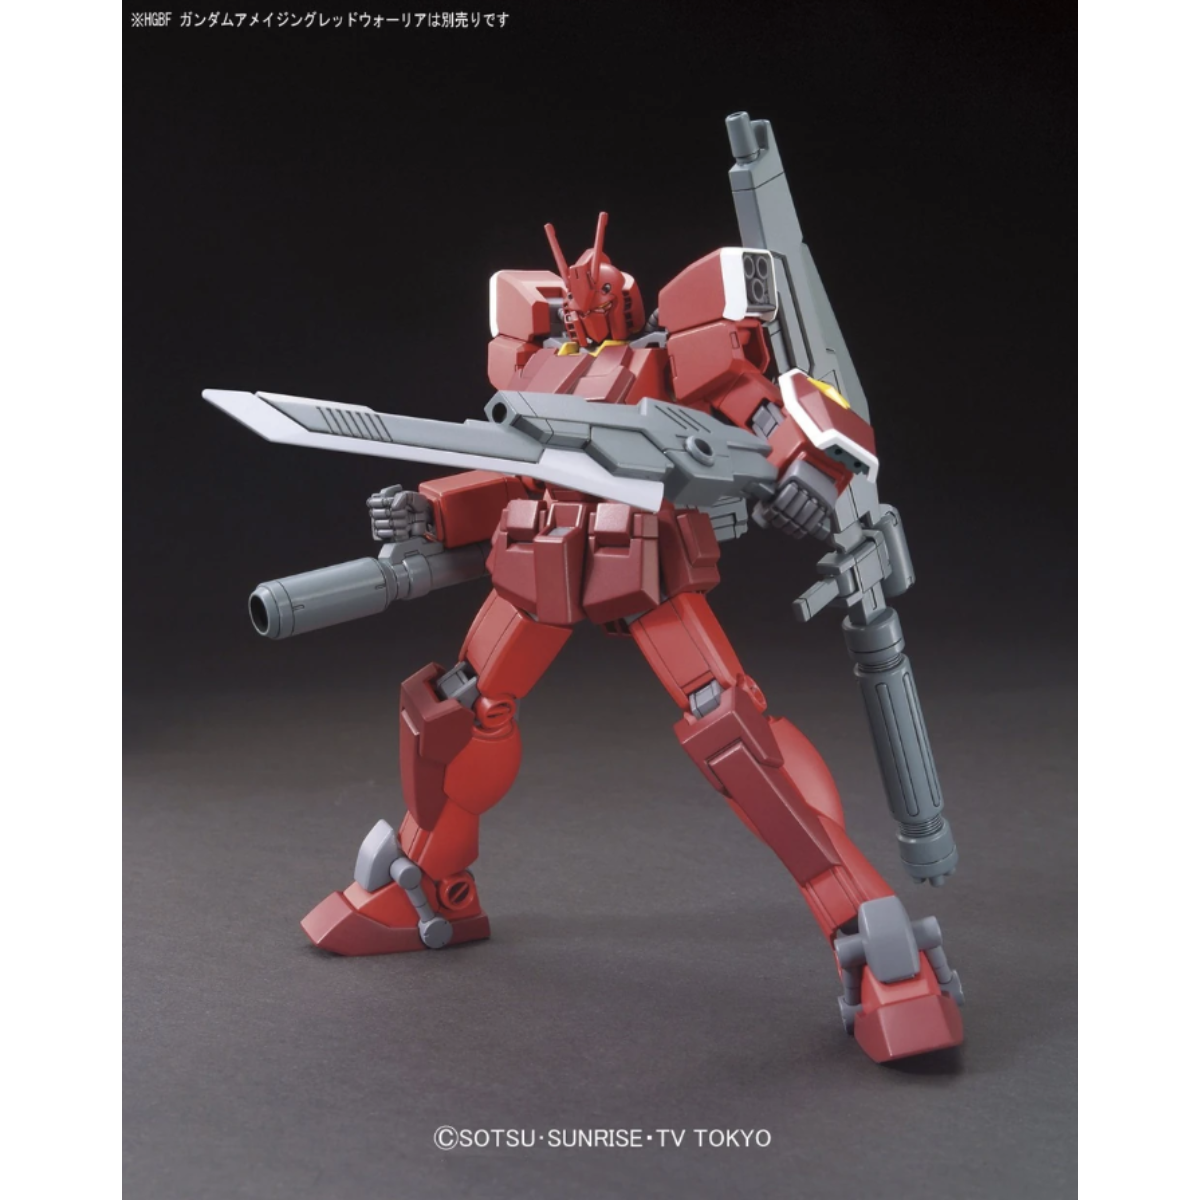 Gunpla HGBF 1/144 Gundam Amazing Red Warrior-Bandai-Ace Cards & Collectibles